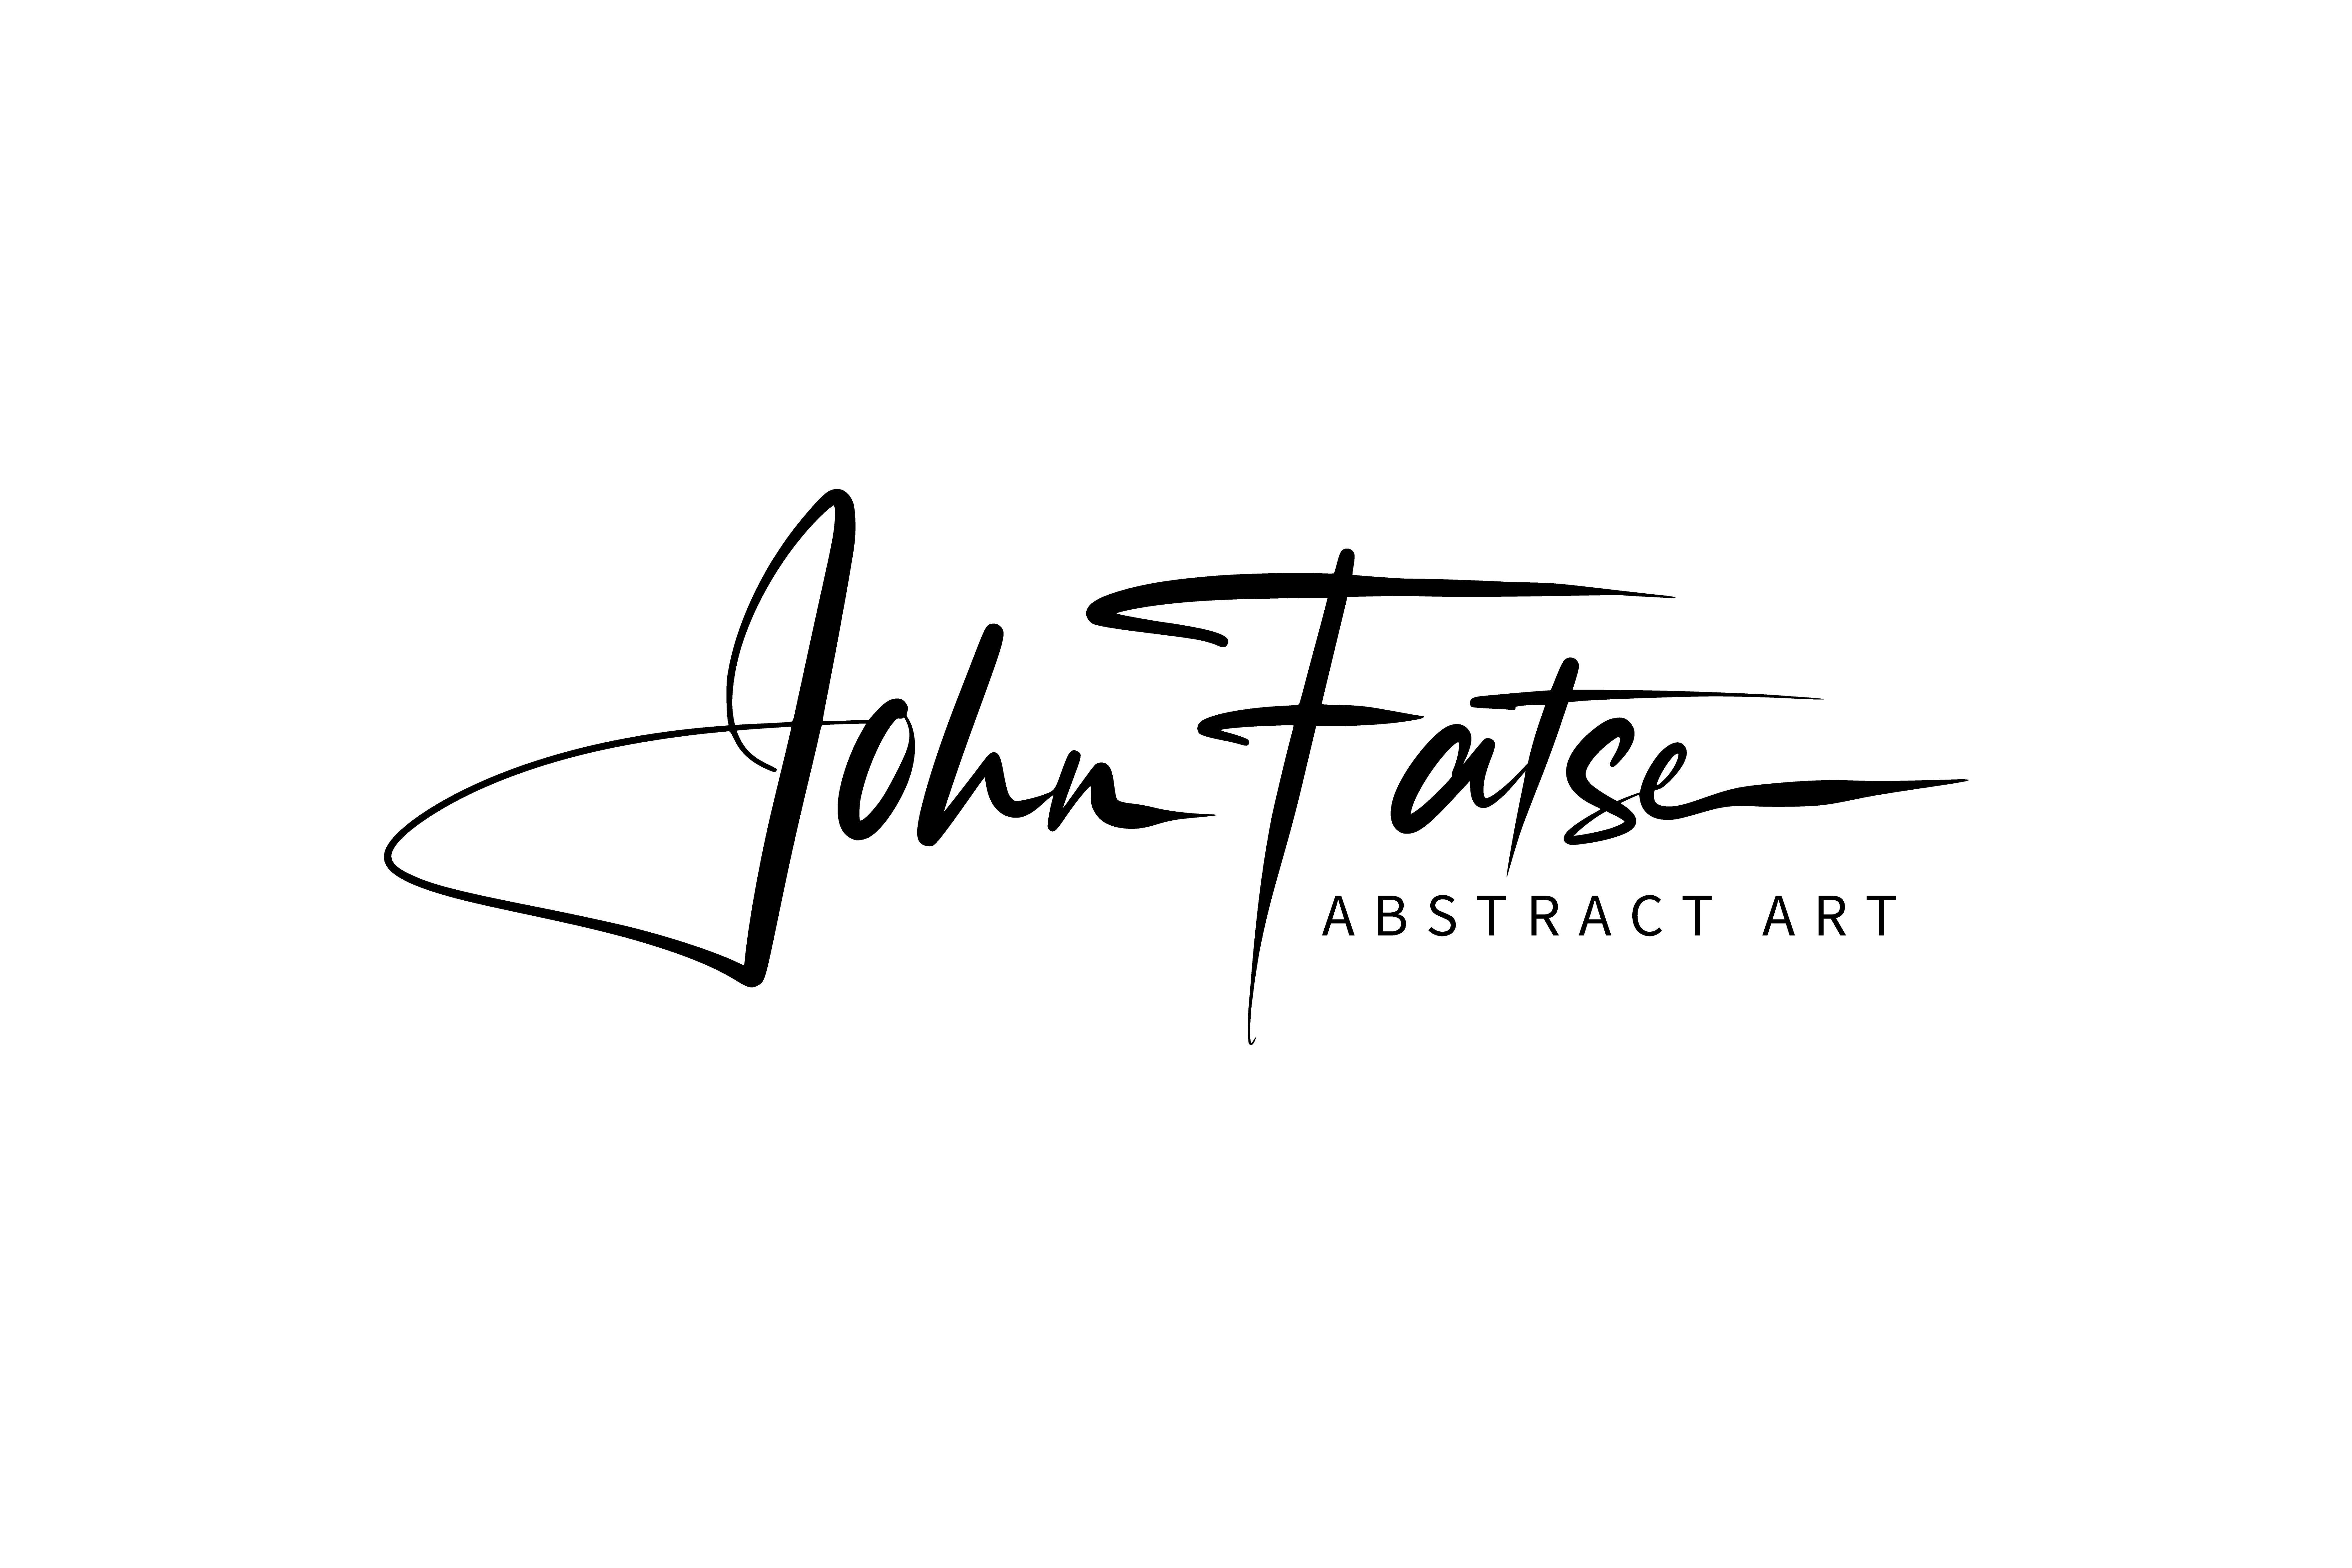 Abstract Art by John Fatse